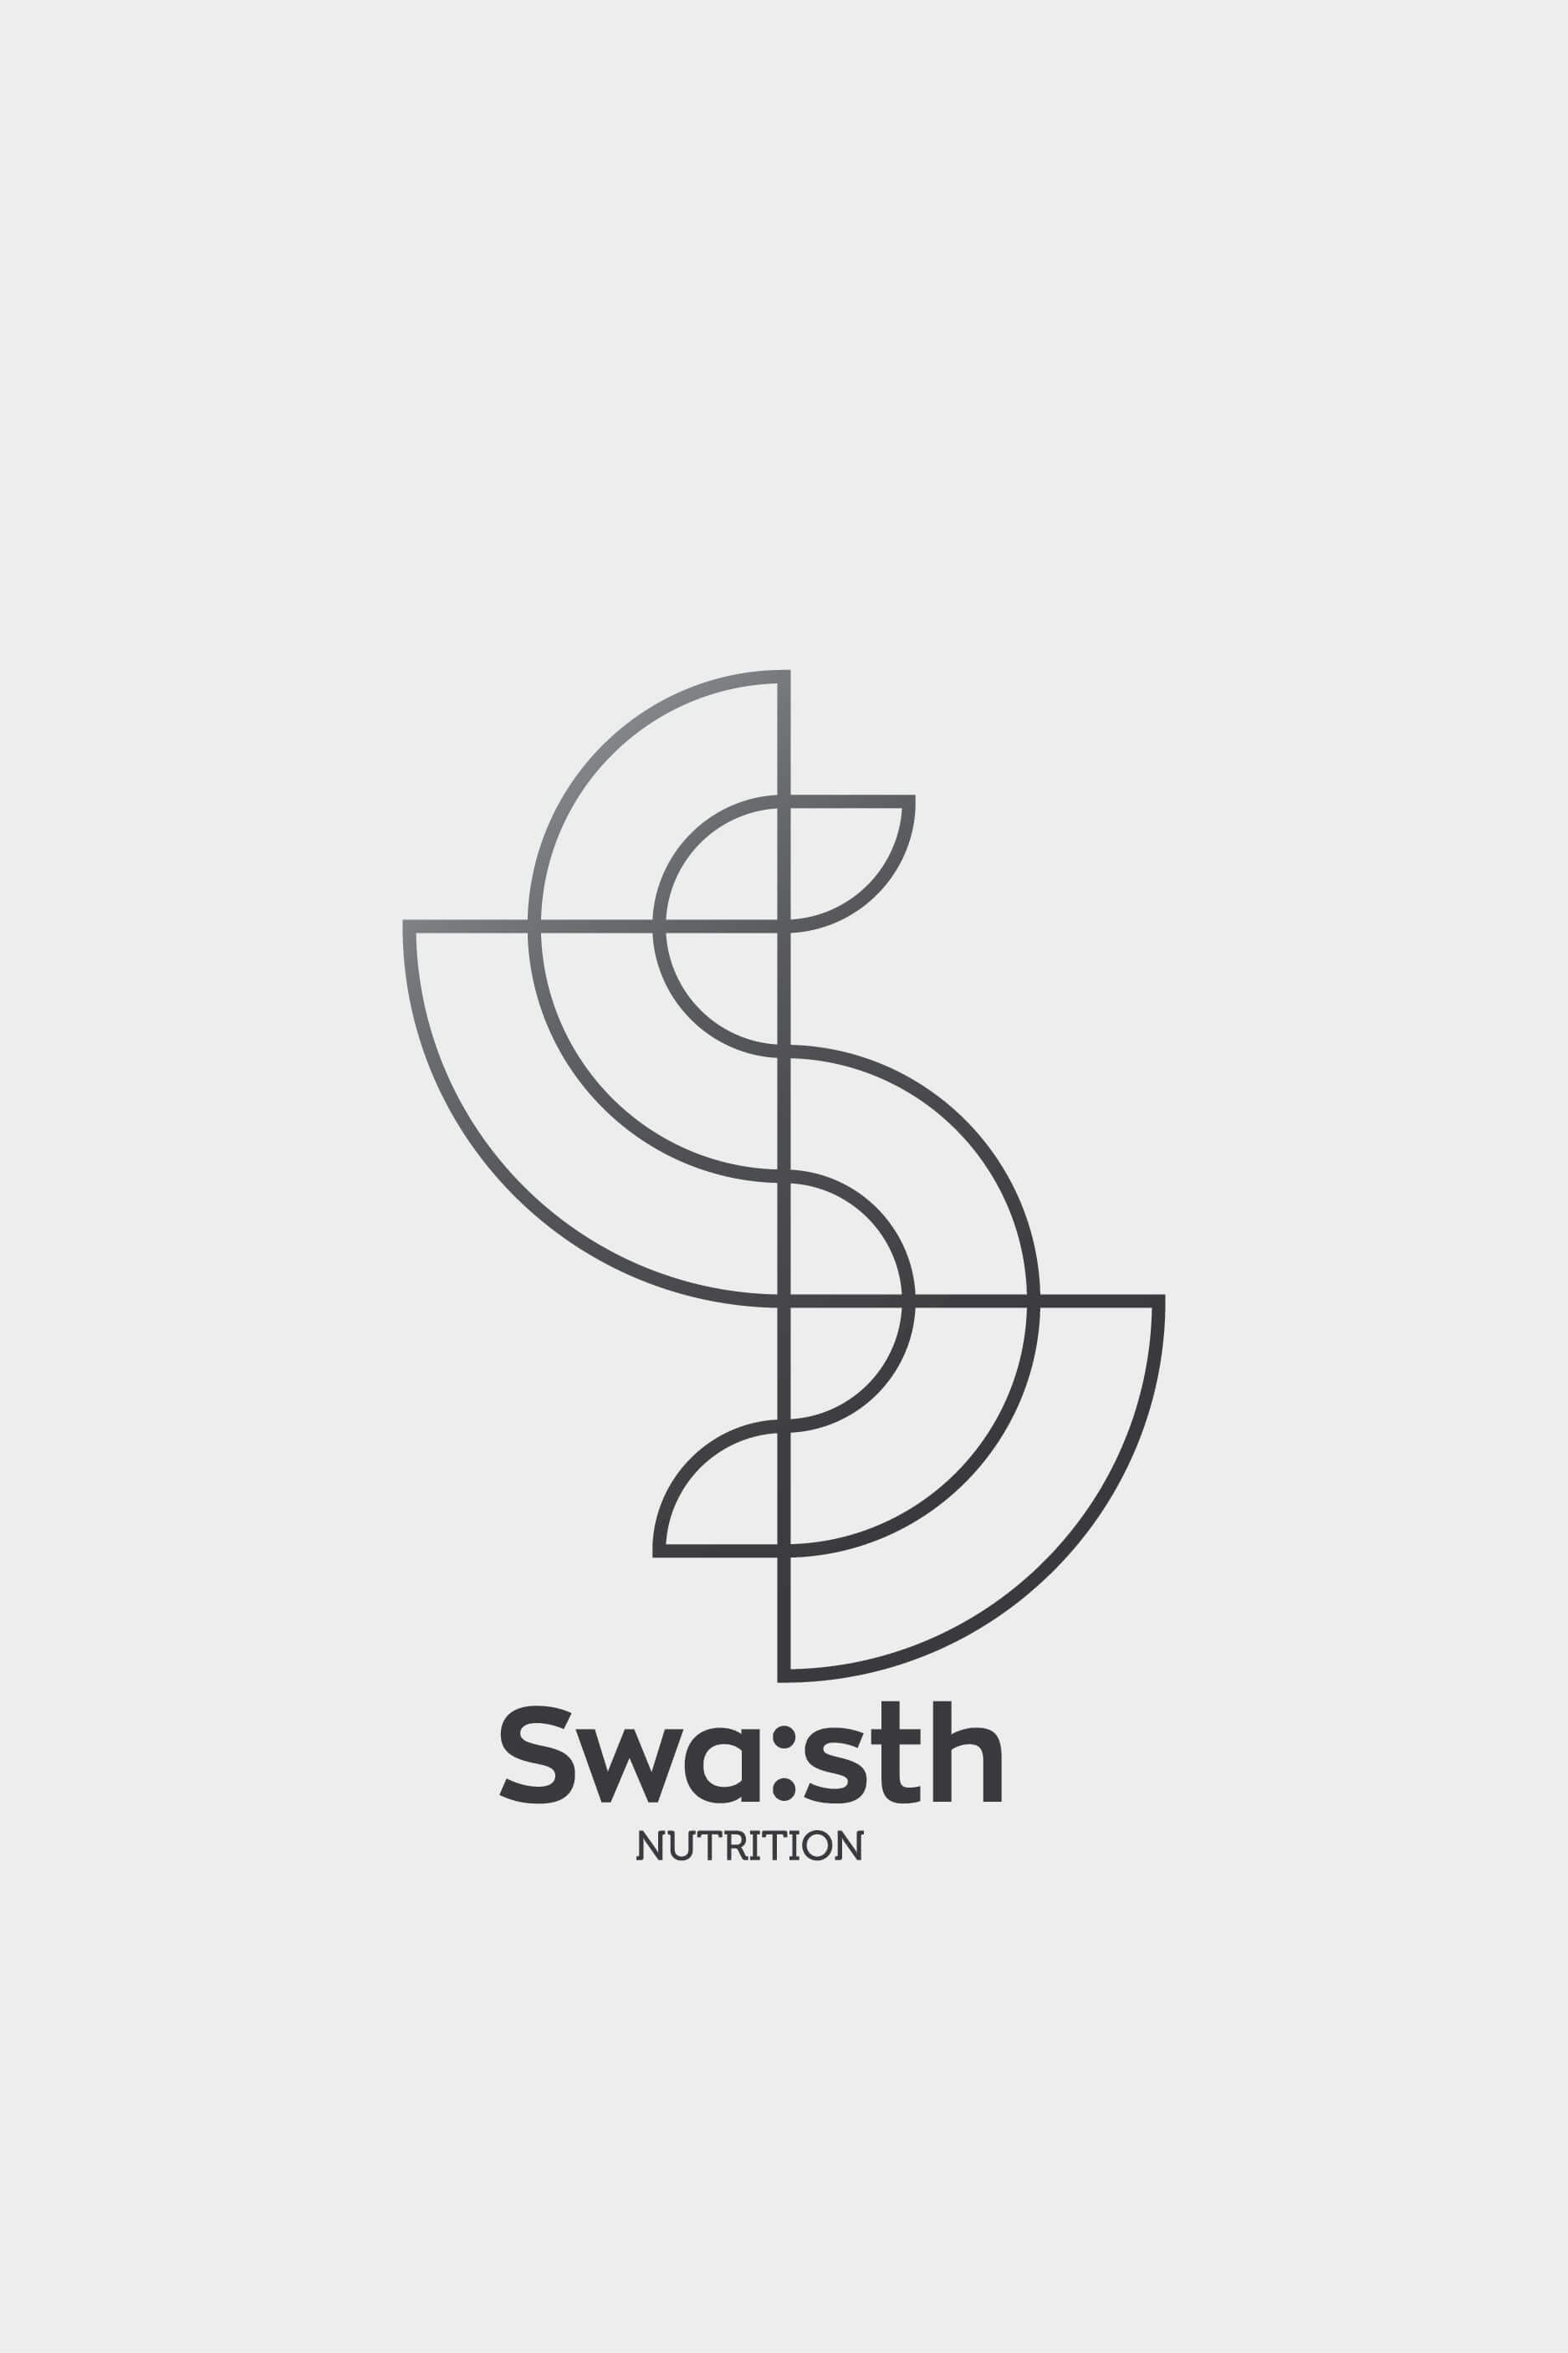 SWASTH - Brand Identity